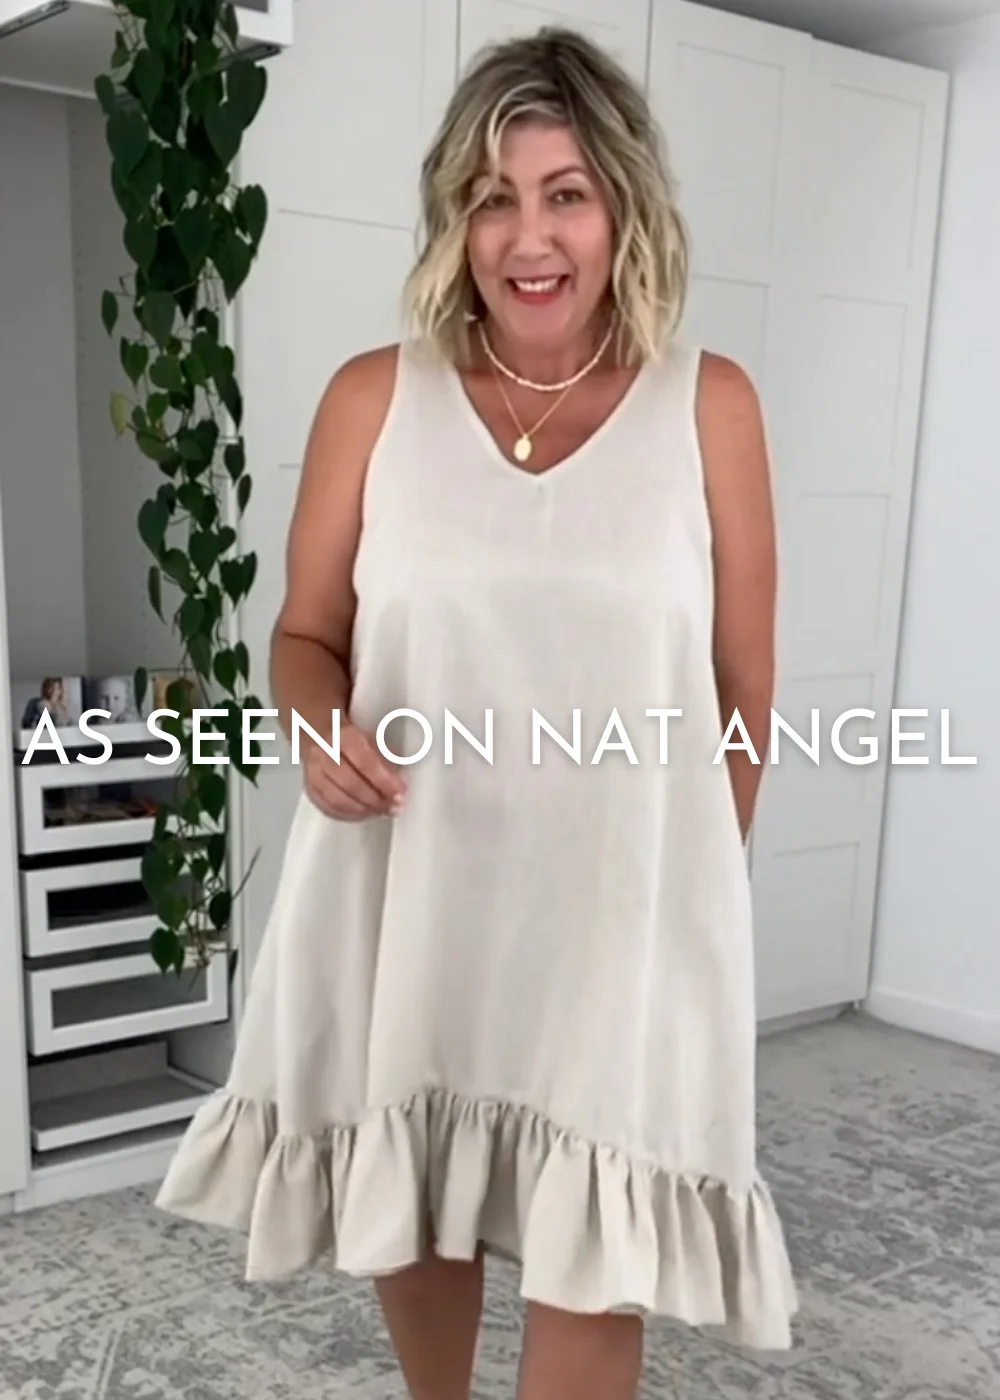 Nat Angel reviews the Salt + Soda Milan Dress on Vimeo